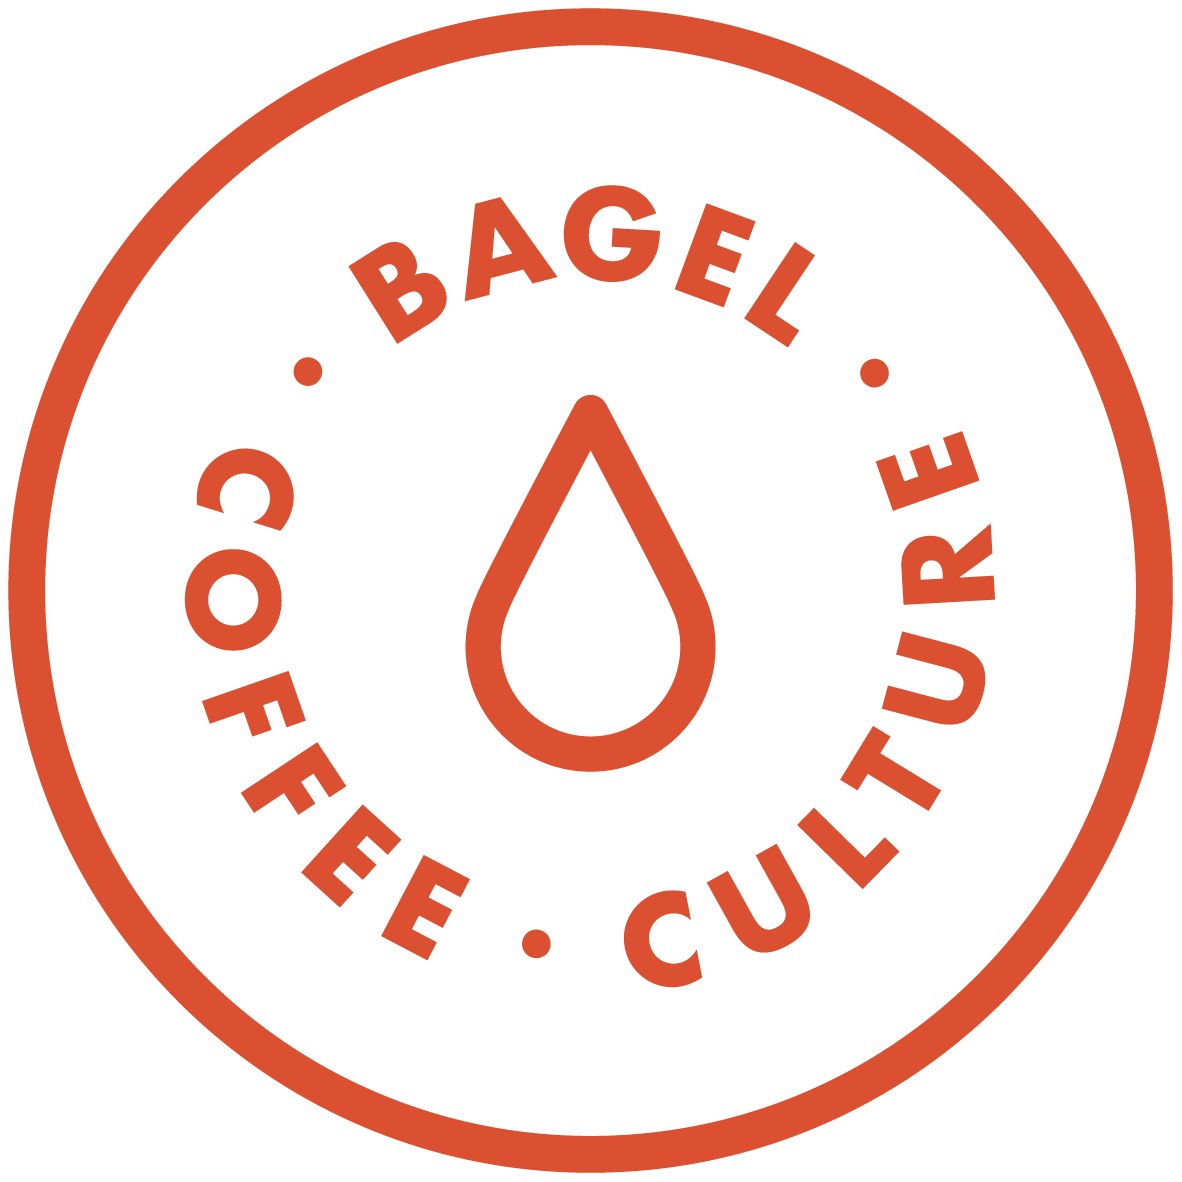 Bagel Coffee Culture